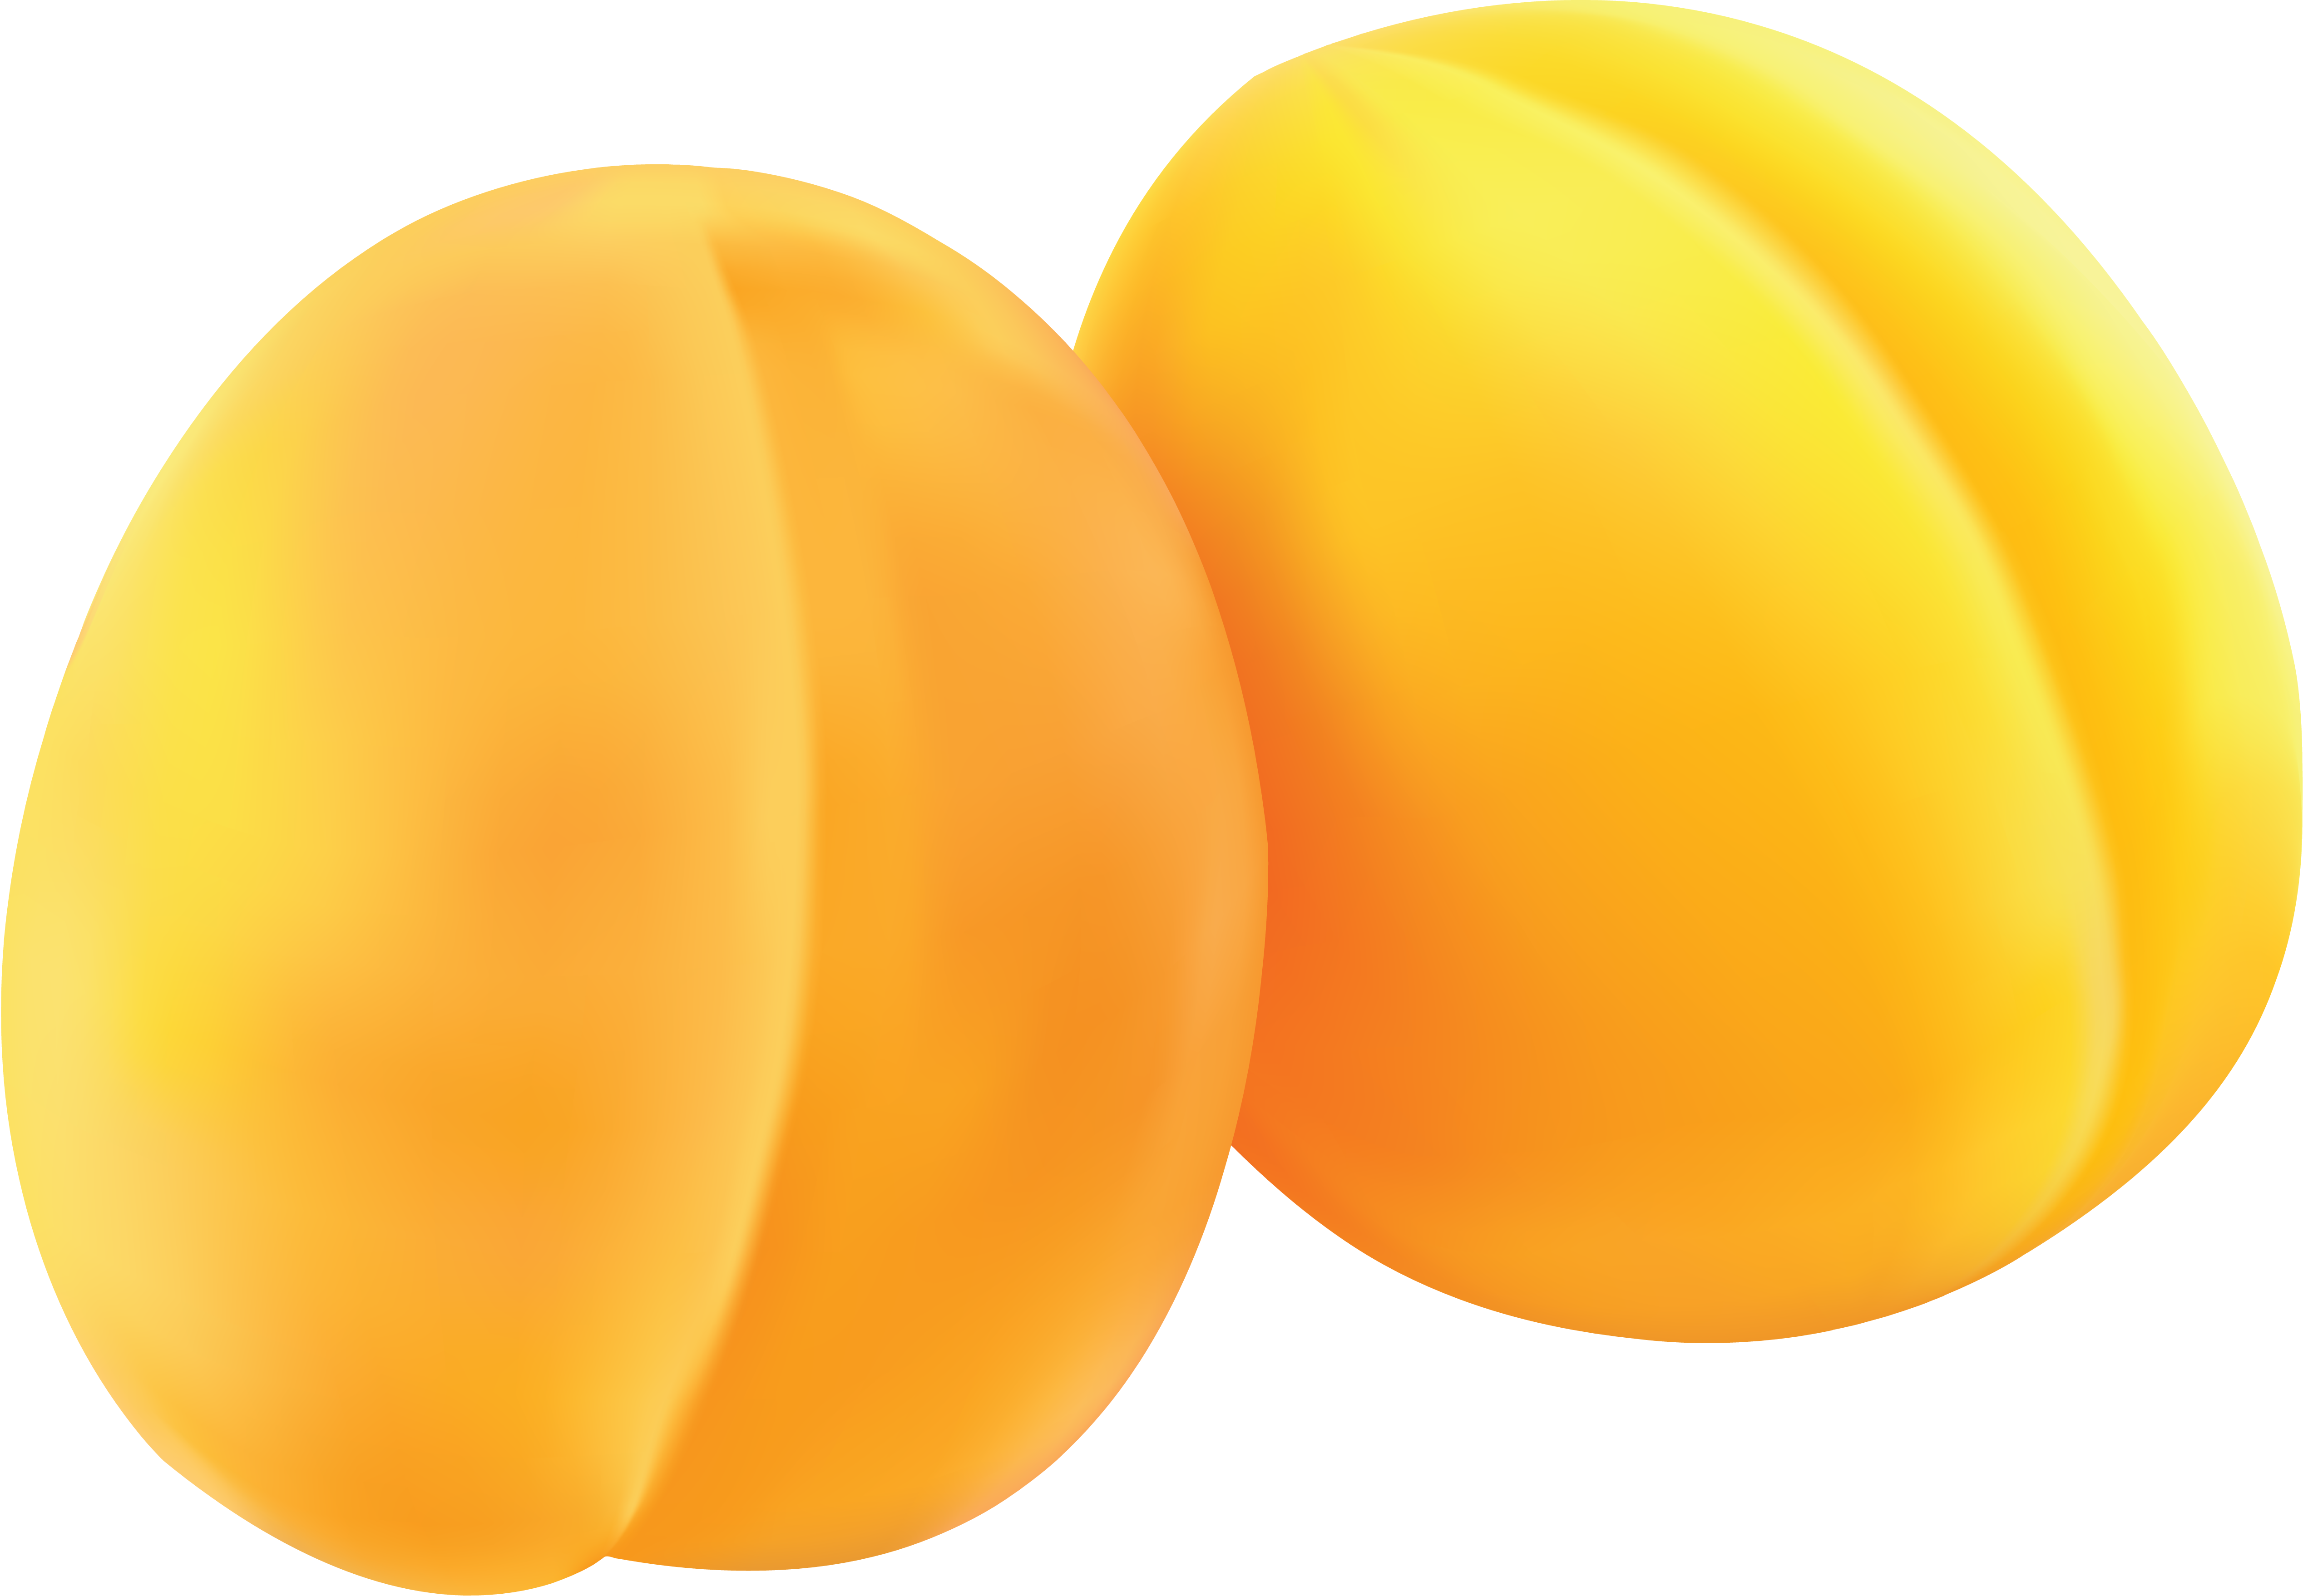 Zwei gelbe Aprikosen